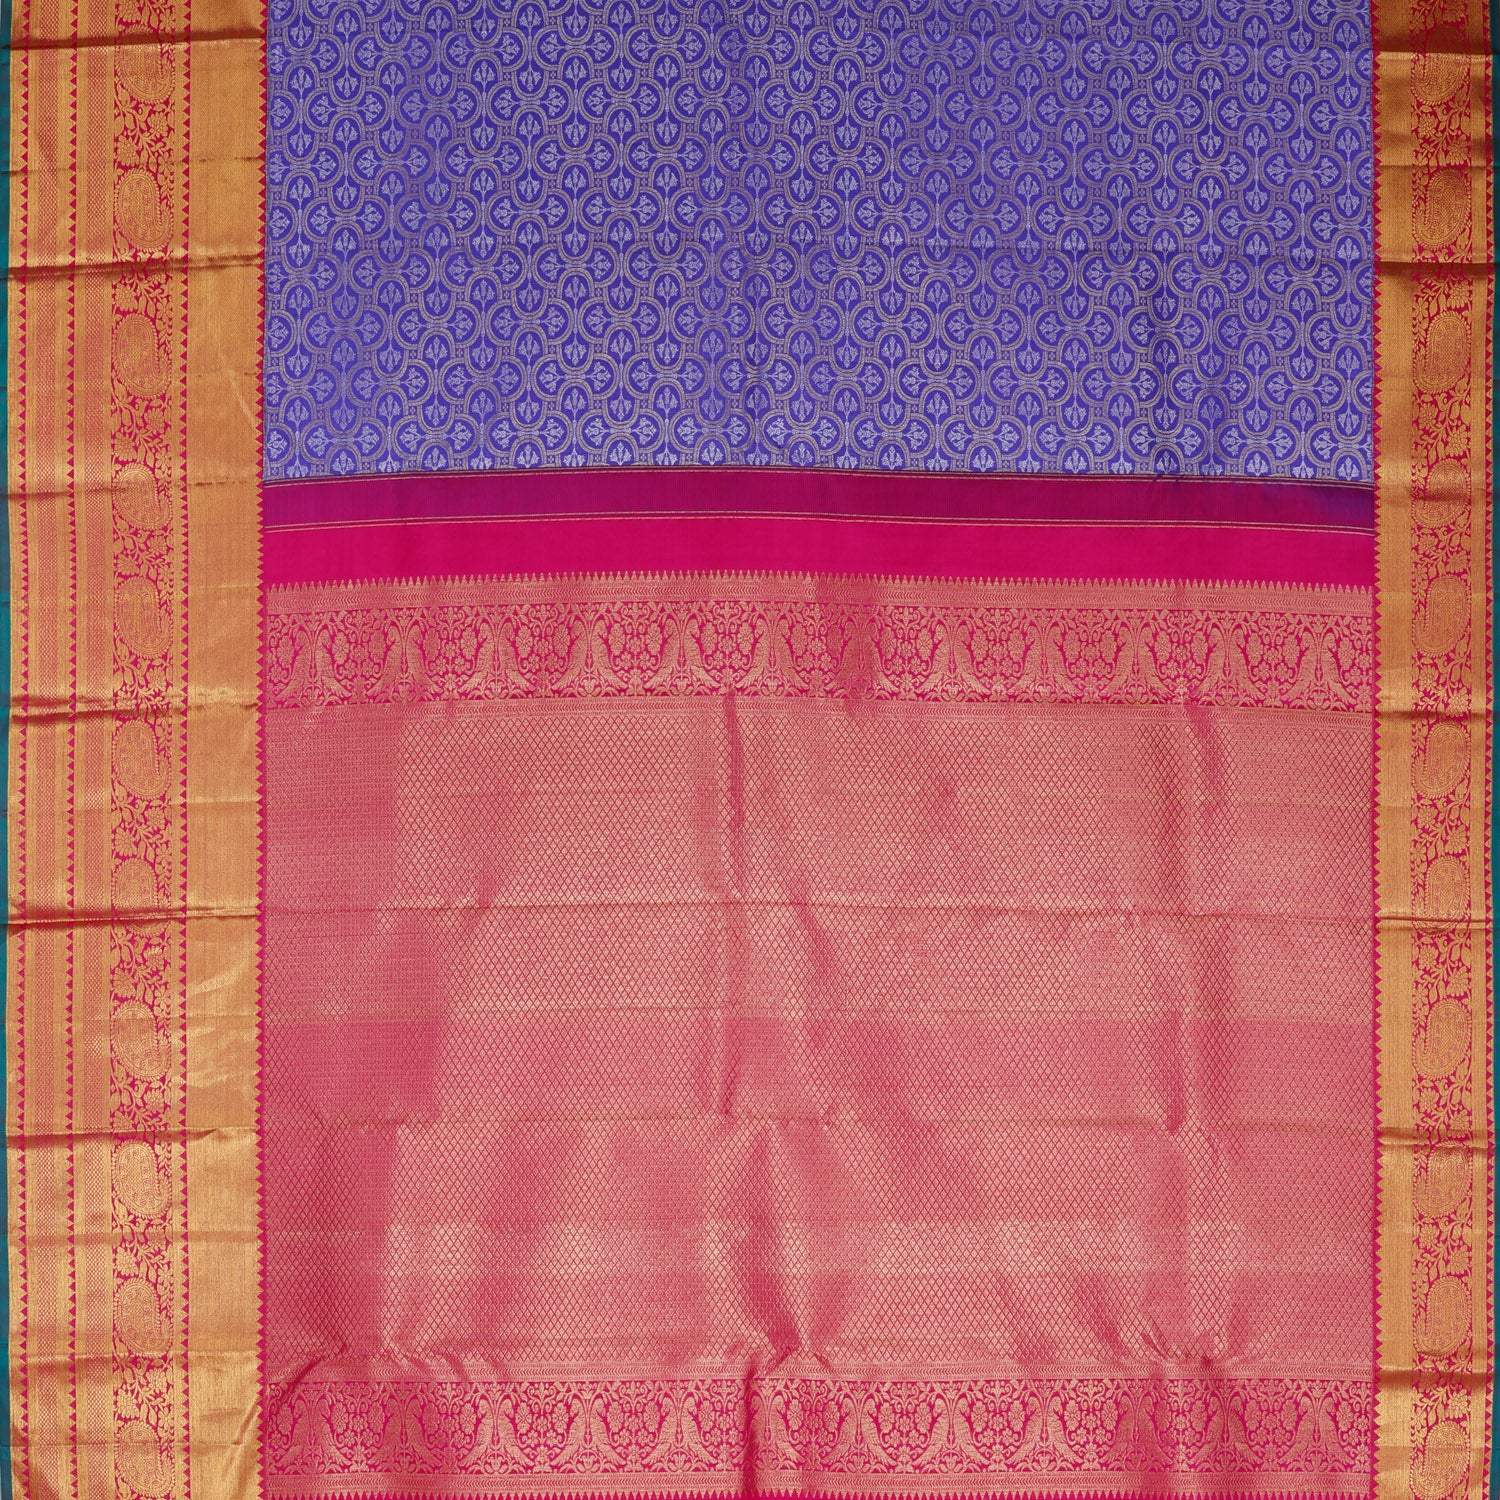 Blue Violet Kanjivaram Silk Saree With Floral Motif Pattern - Singhania's